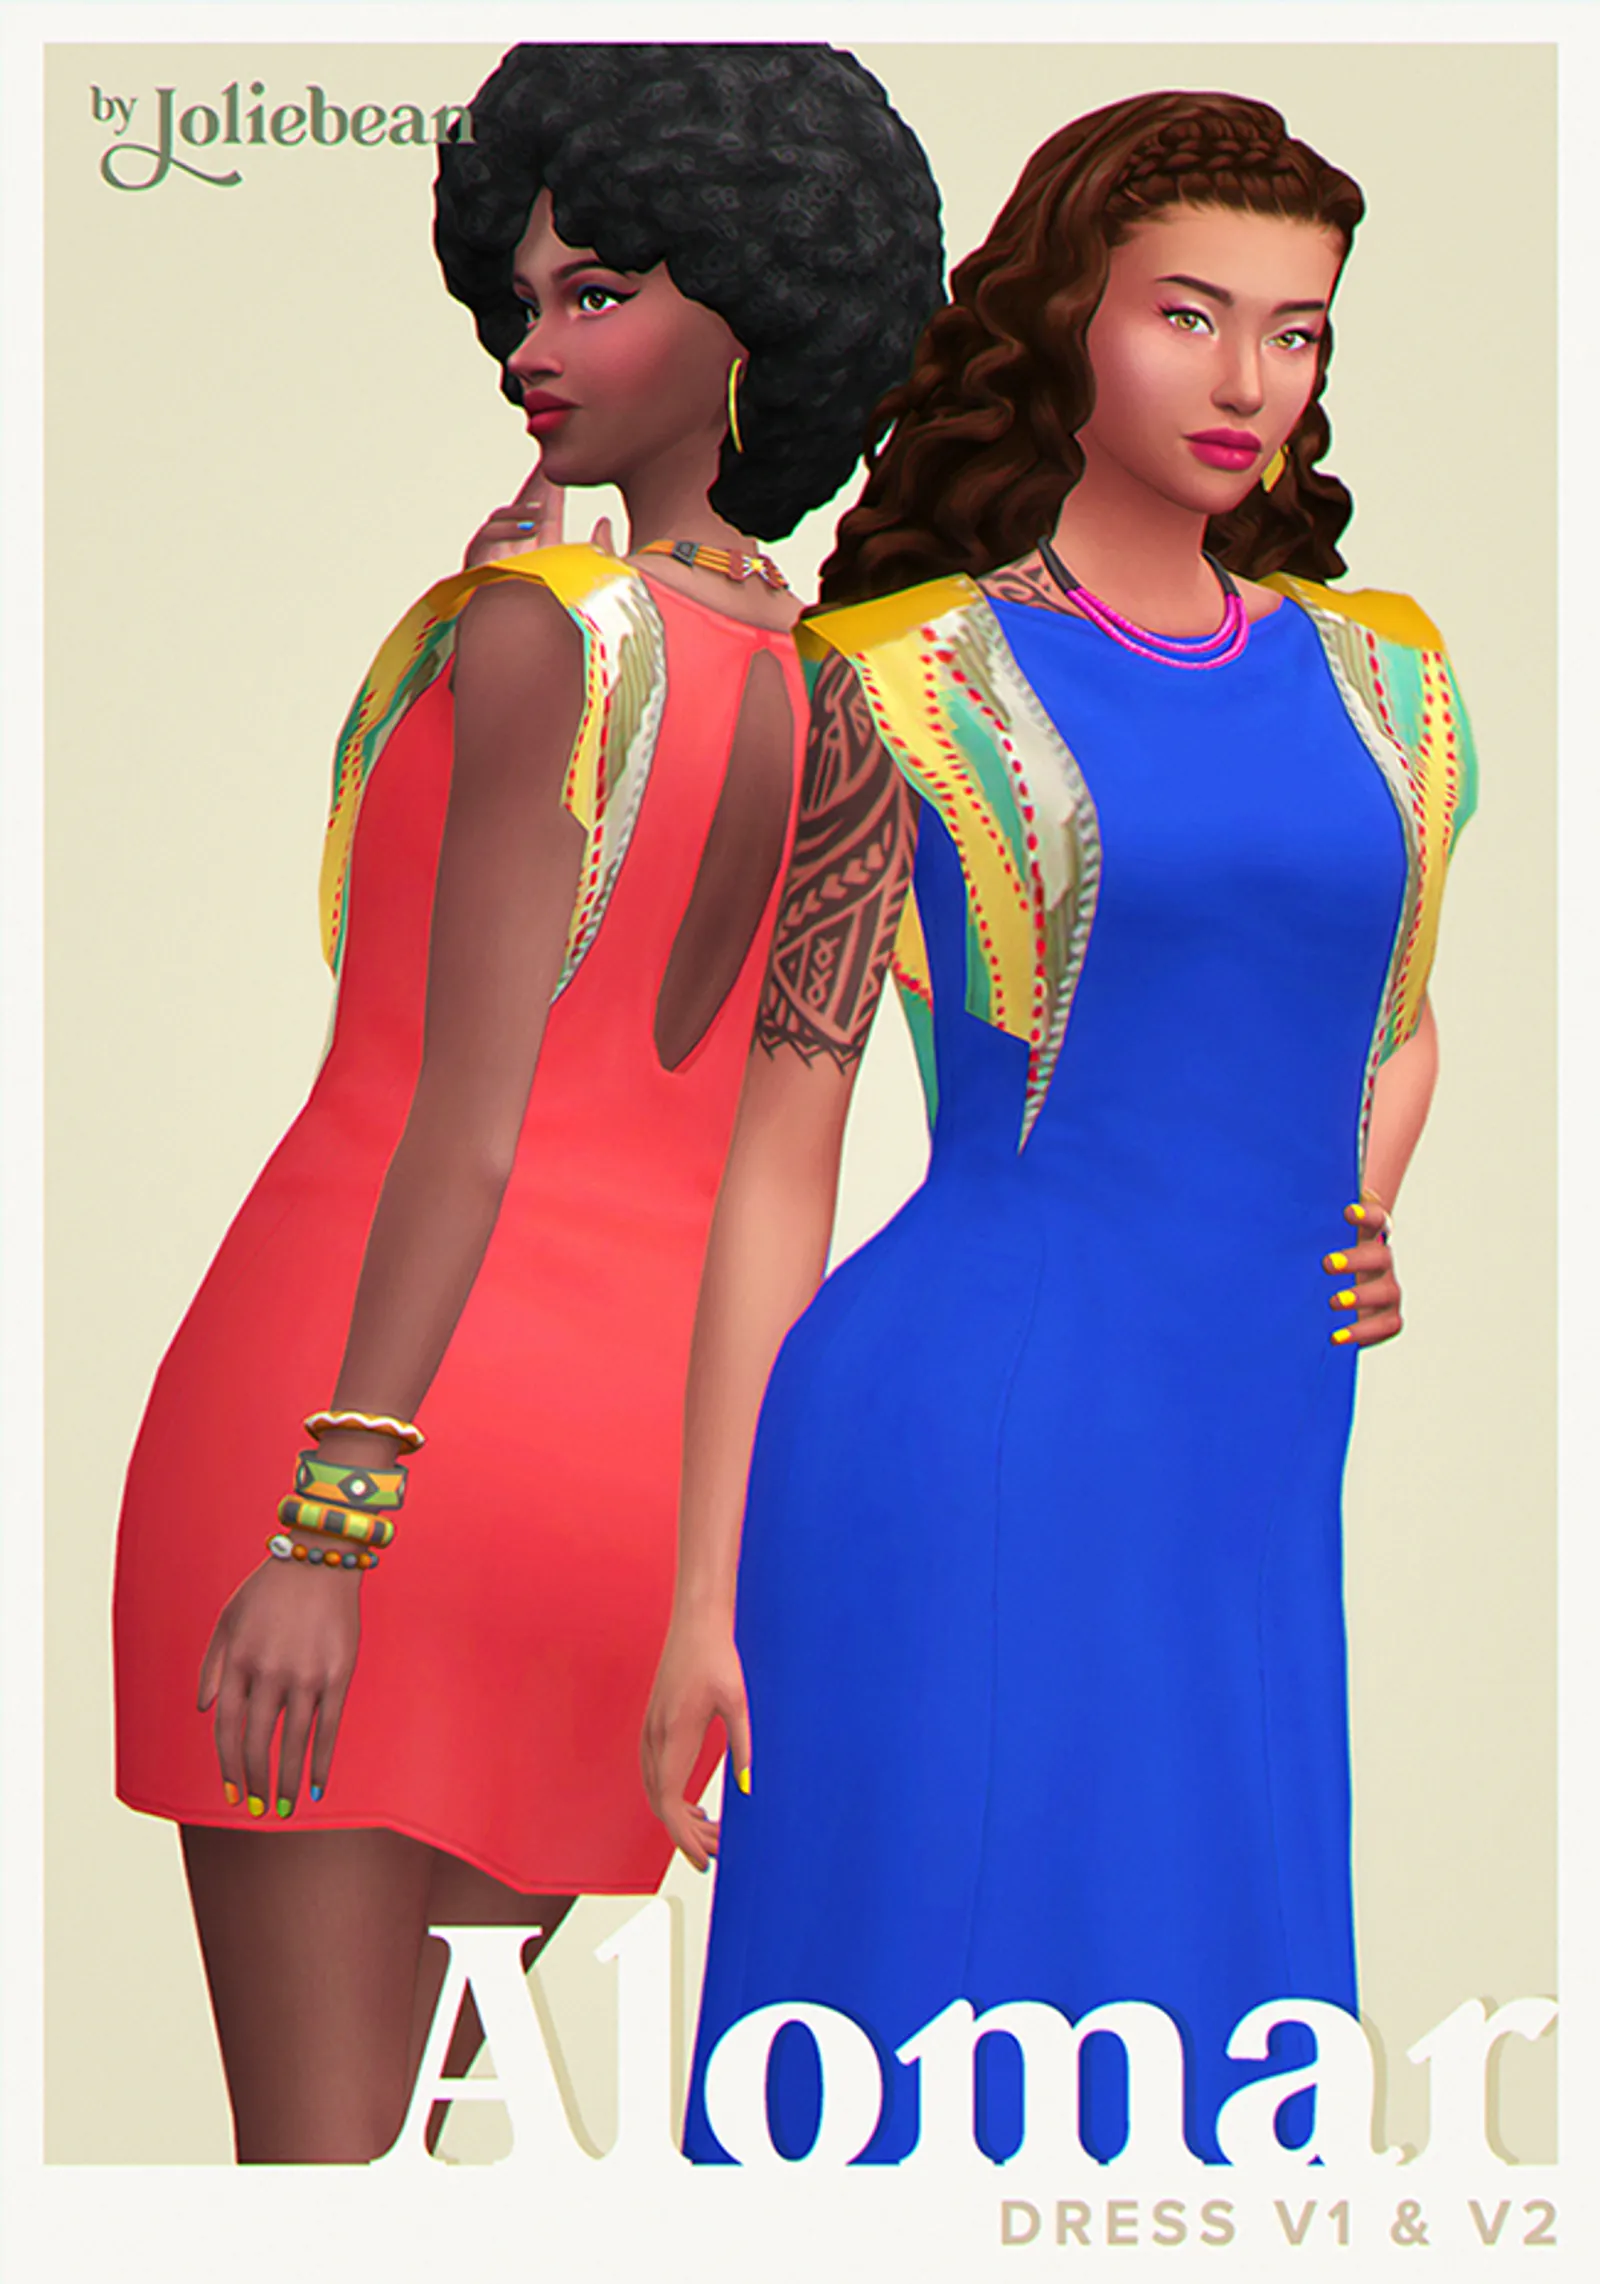 Alomar Dress in 2 versions by Joliebean